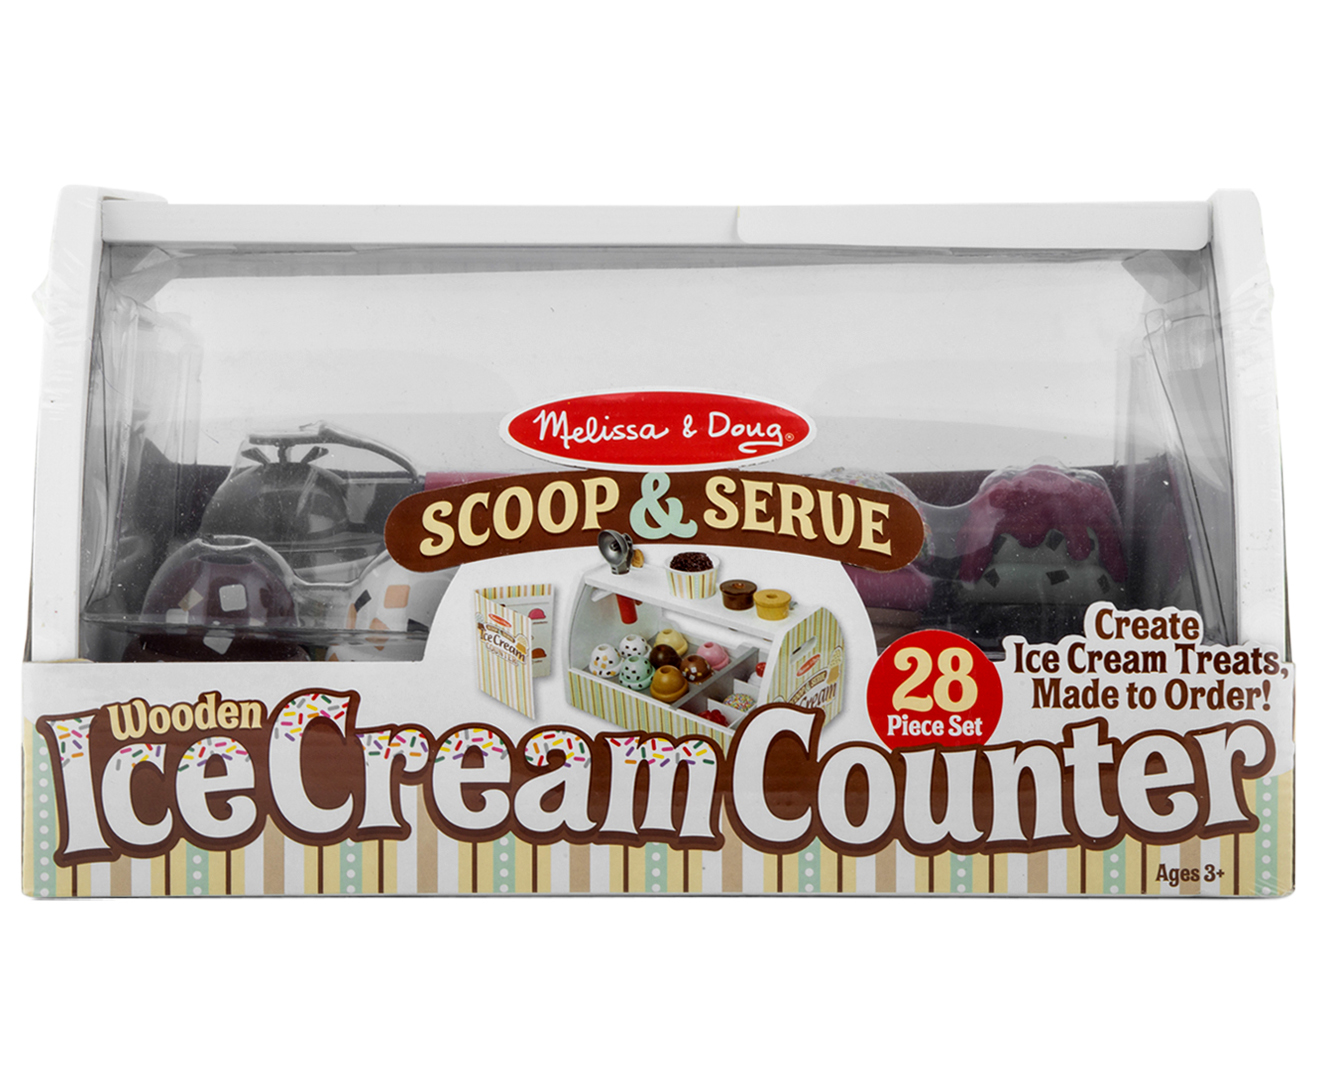 melissa & doug wooden scoop & serve ice cream counter